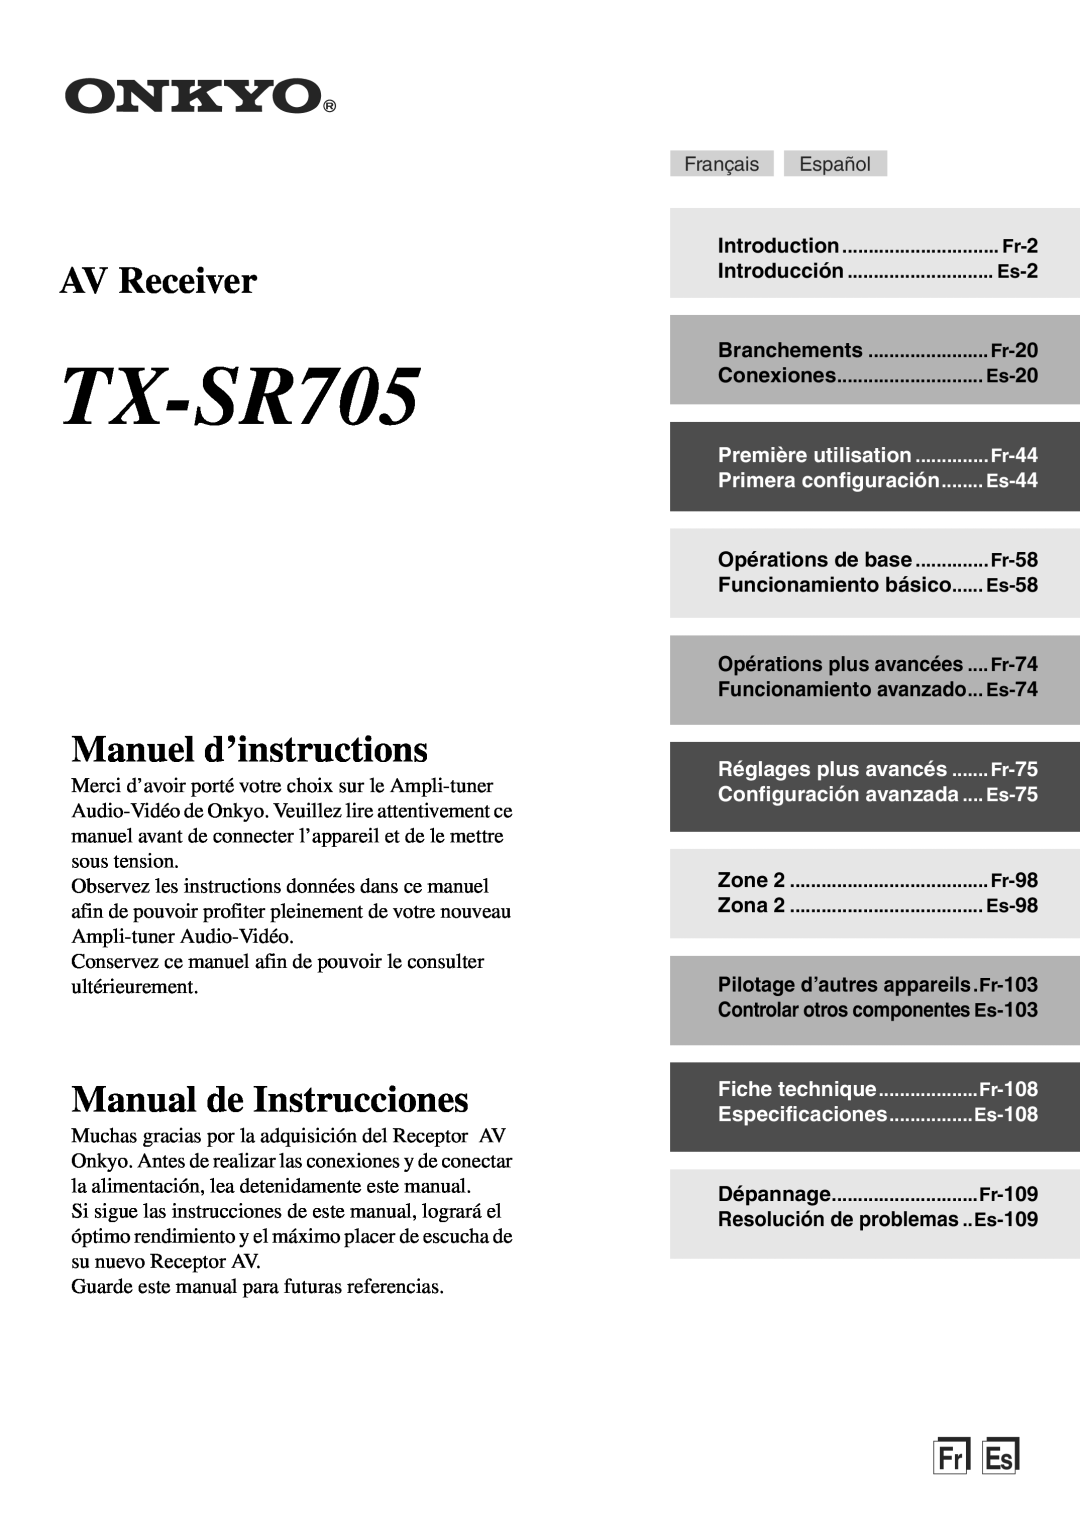 Onkyo TX-SR705 manual Français Español, Première utilisation, Primera configuración, Opérations de base, Especificaciones 